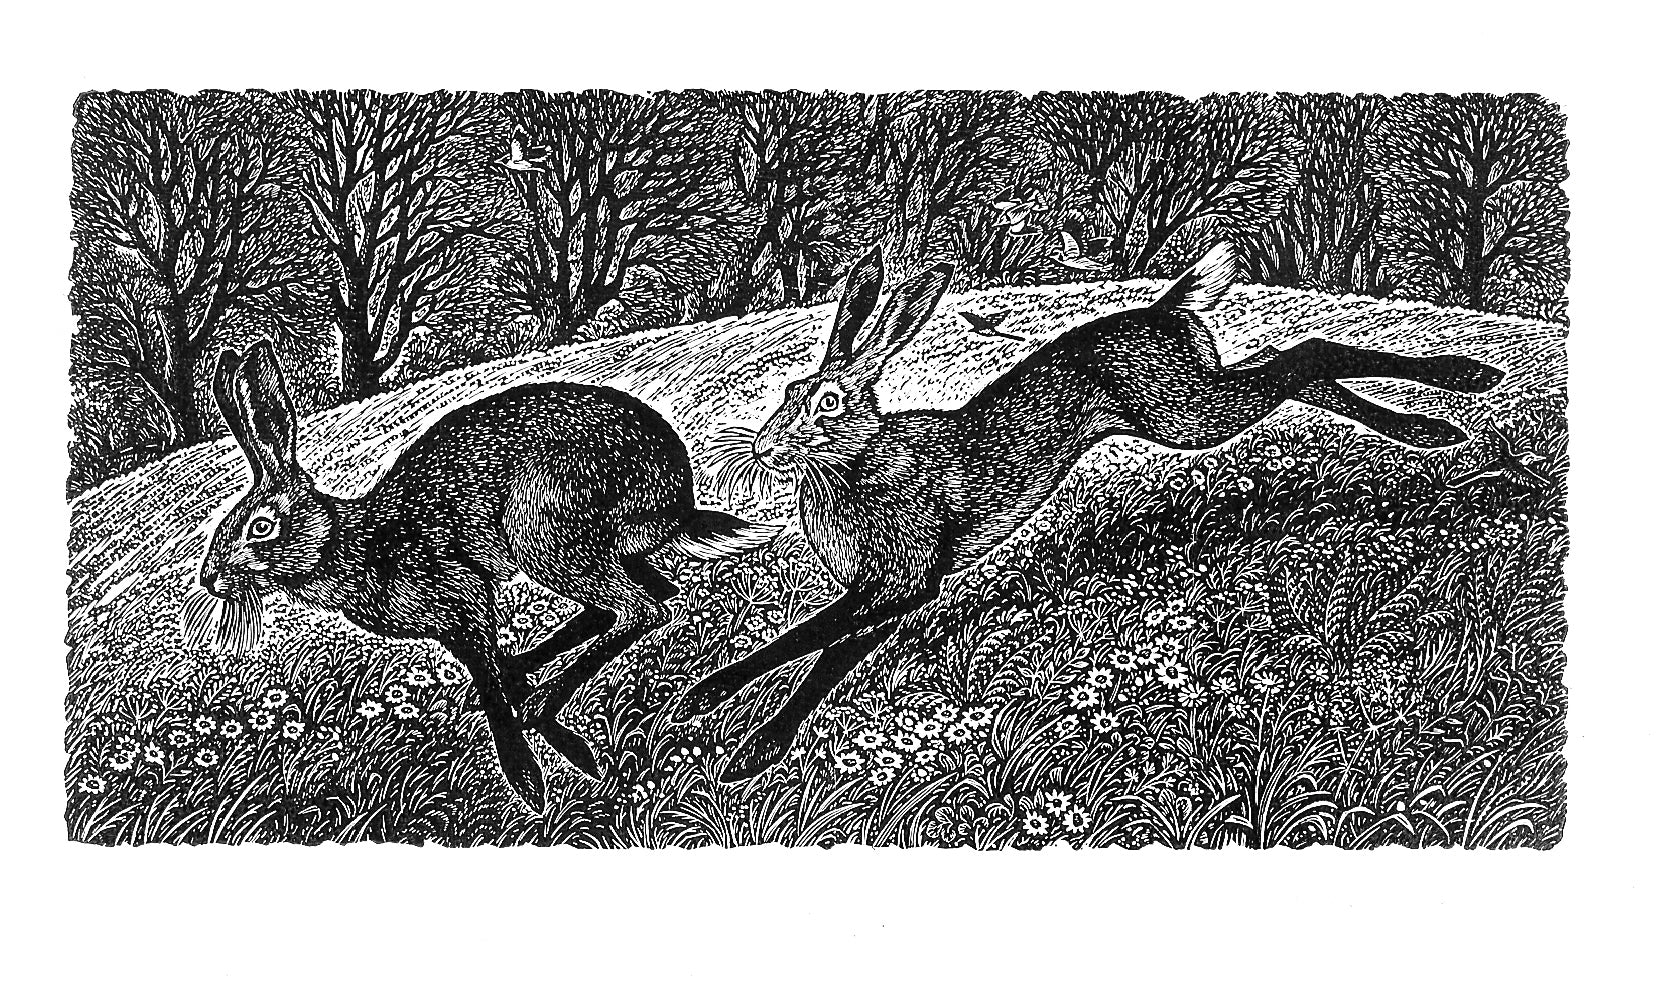 Running Hares